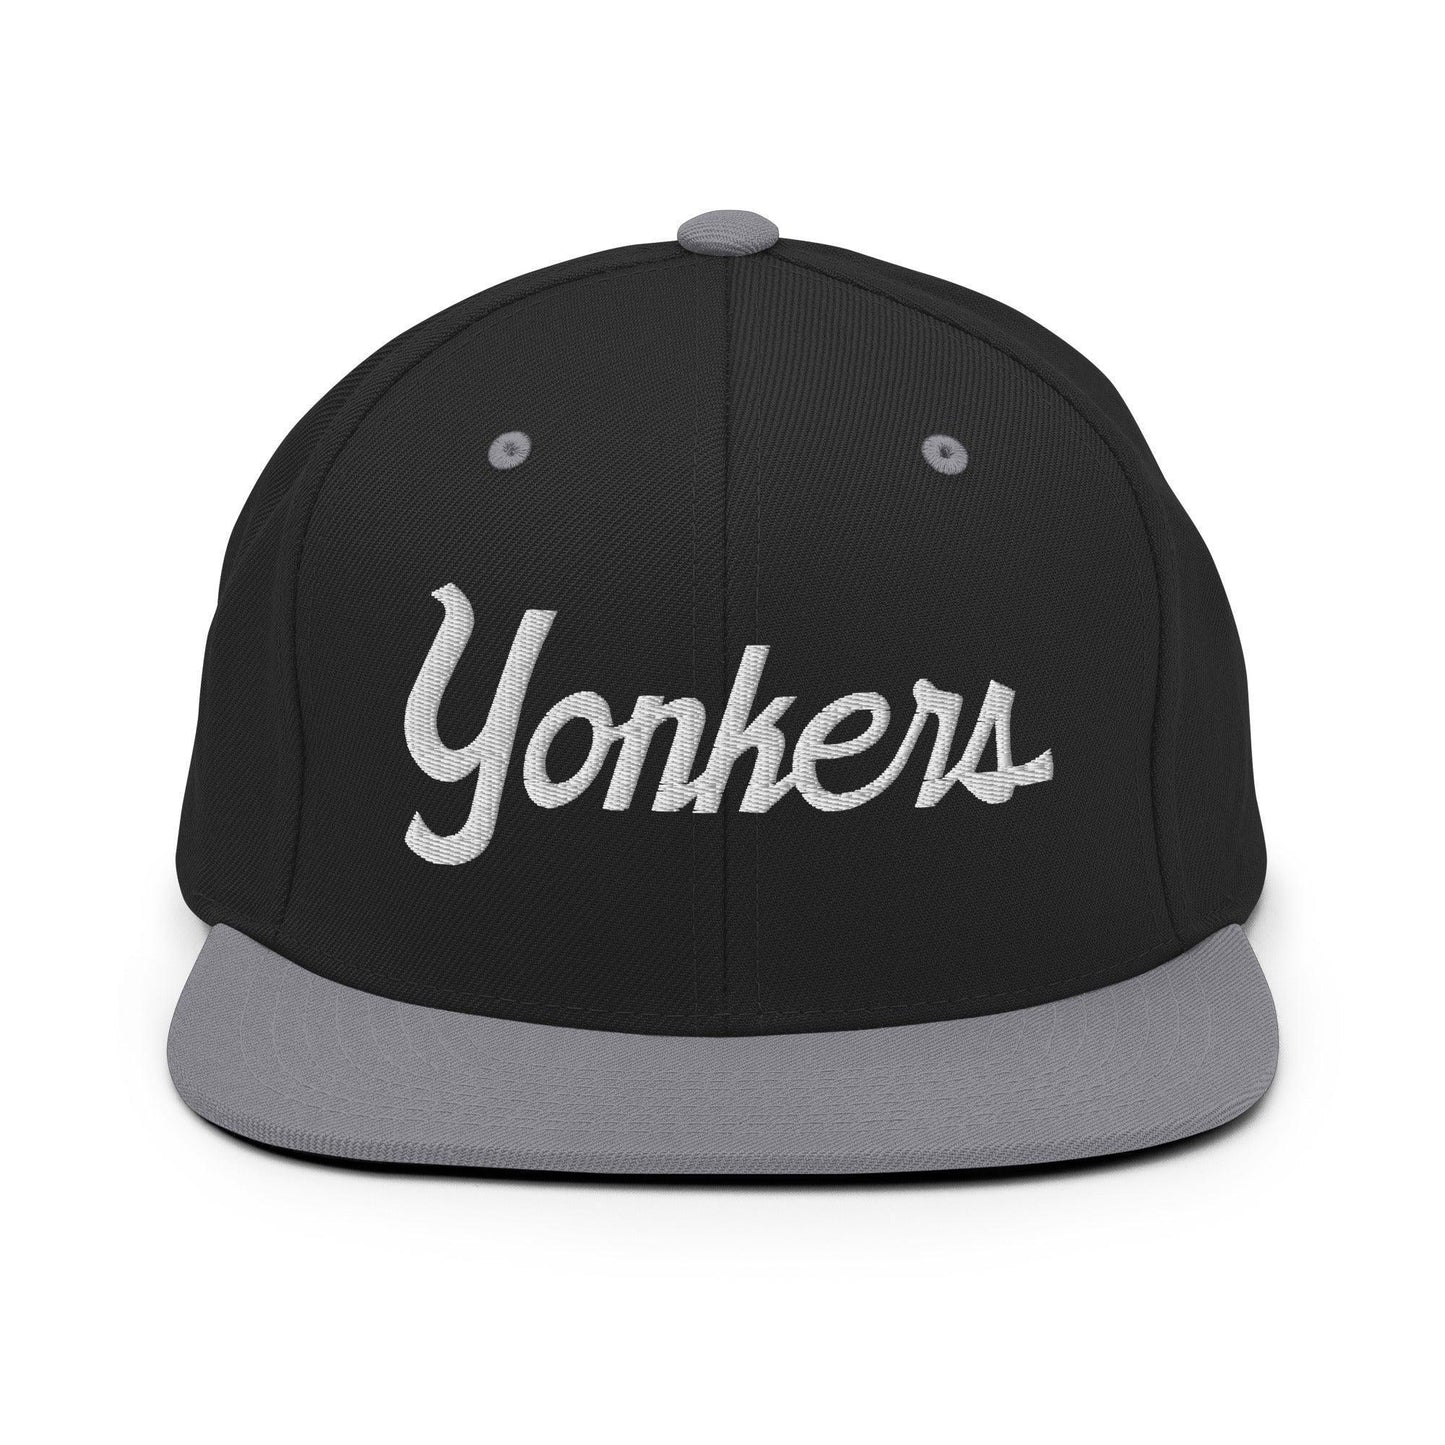 Yonkers Script Snapback Hat Black Silver